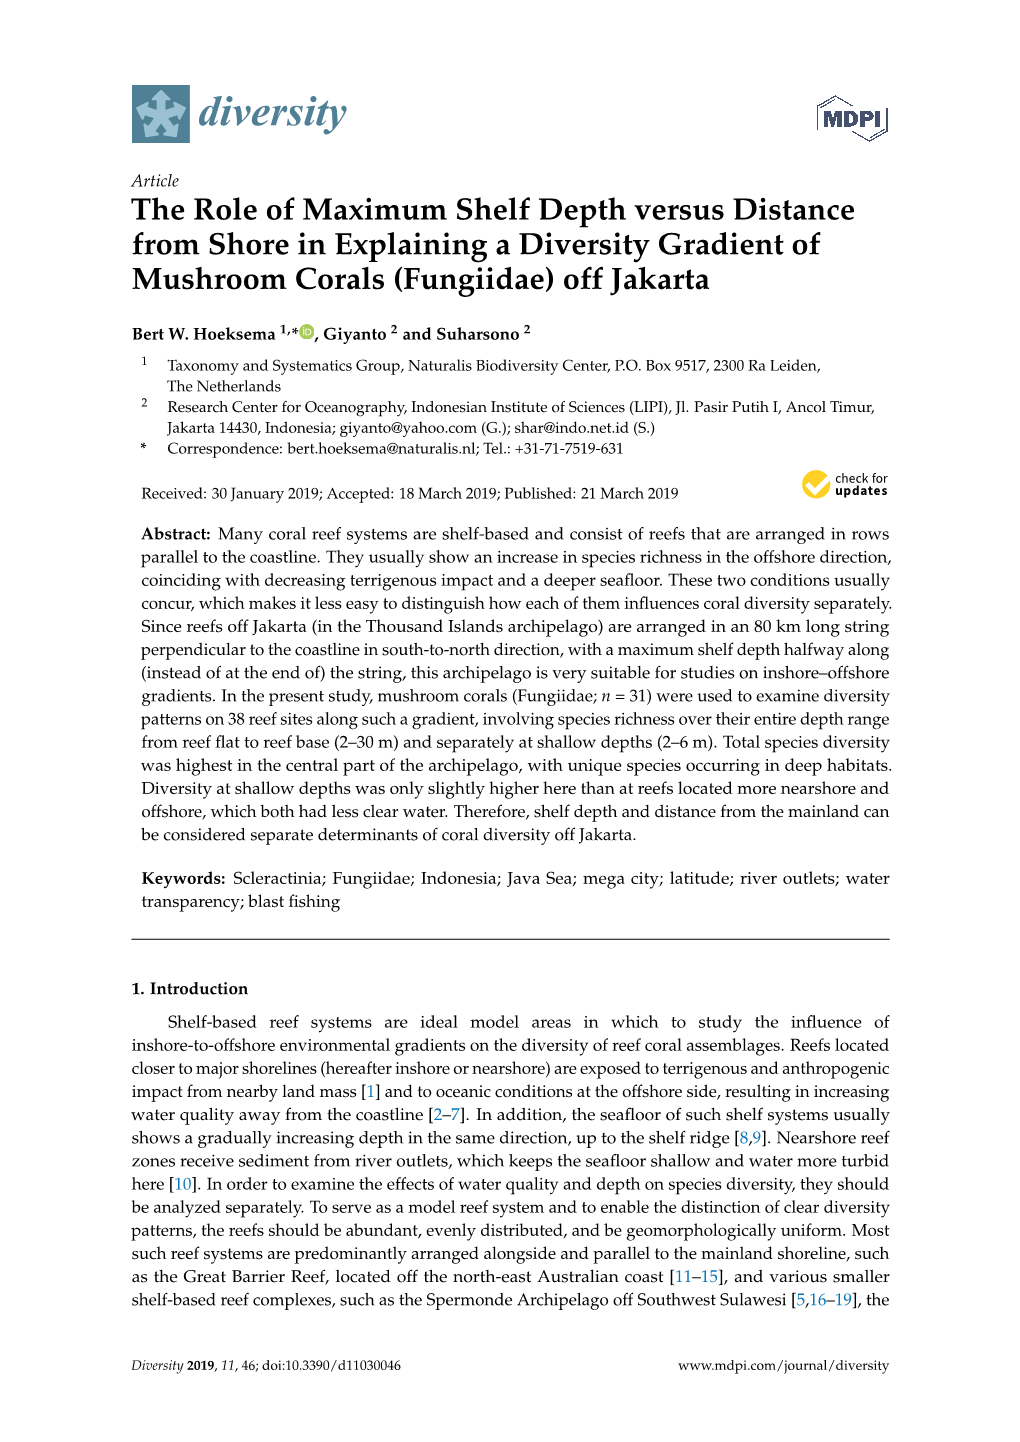 The Role of Maximum Shelf Depth Versus Distance from Shore in Explaining a Diversity Gradient of Mushroom Corals (Fungiidae) Off Jakarta